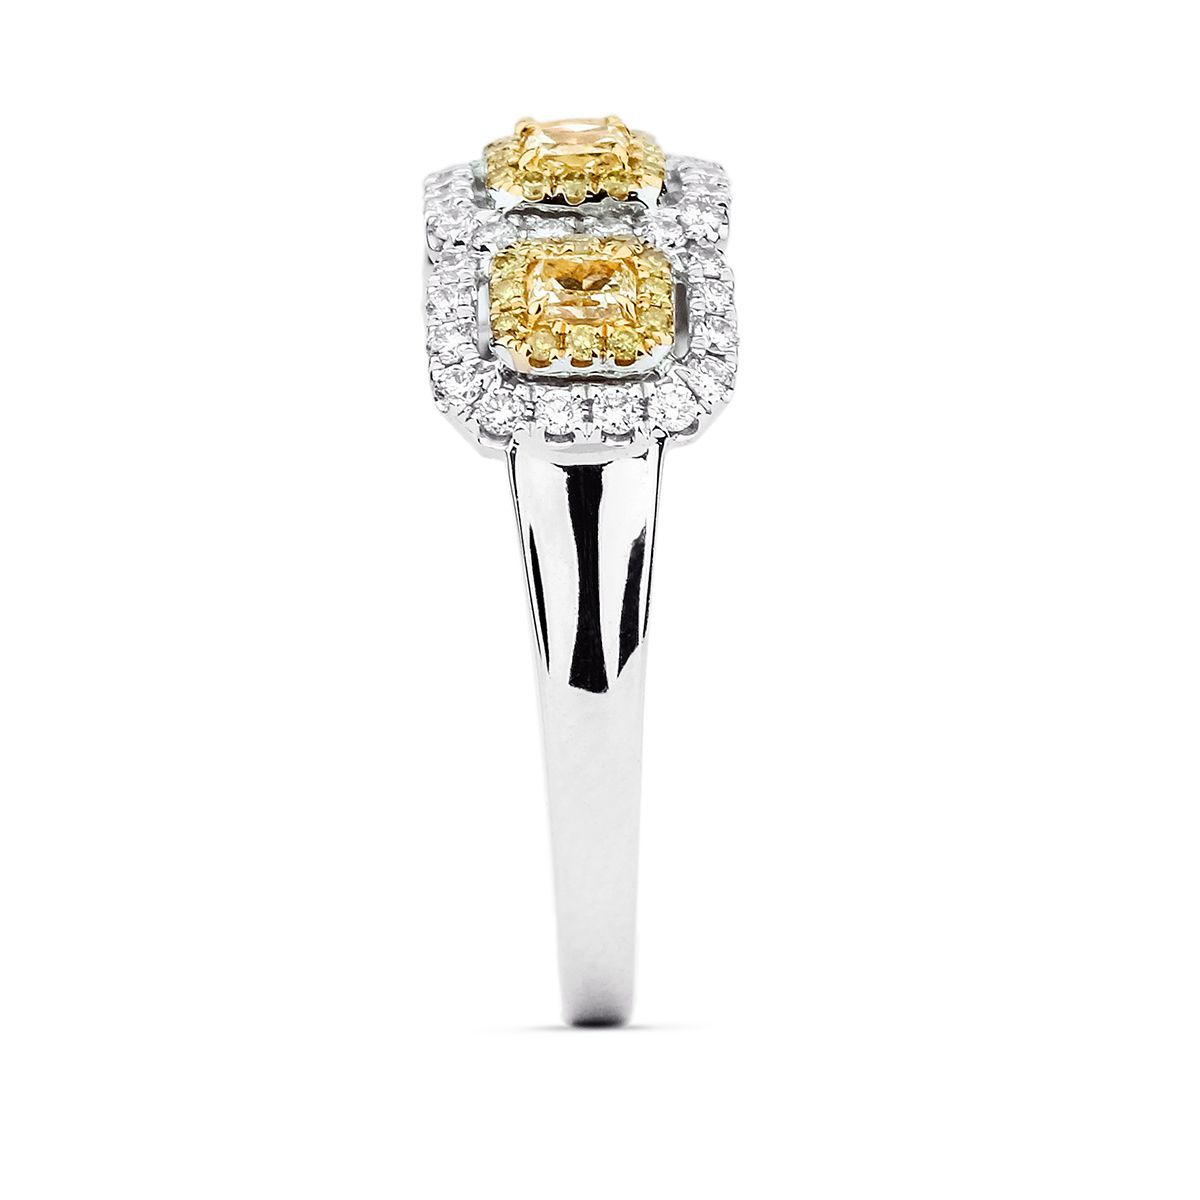 Fancy Intense Yellow Diamond Ring, 1.23 Ct. TW, Radiant shape